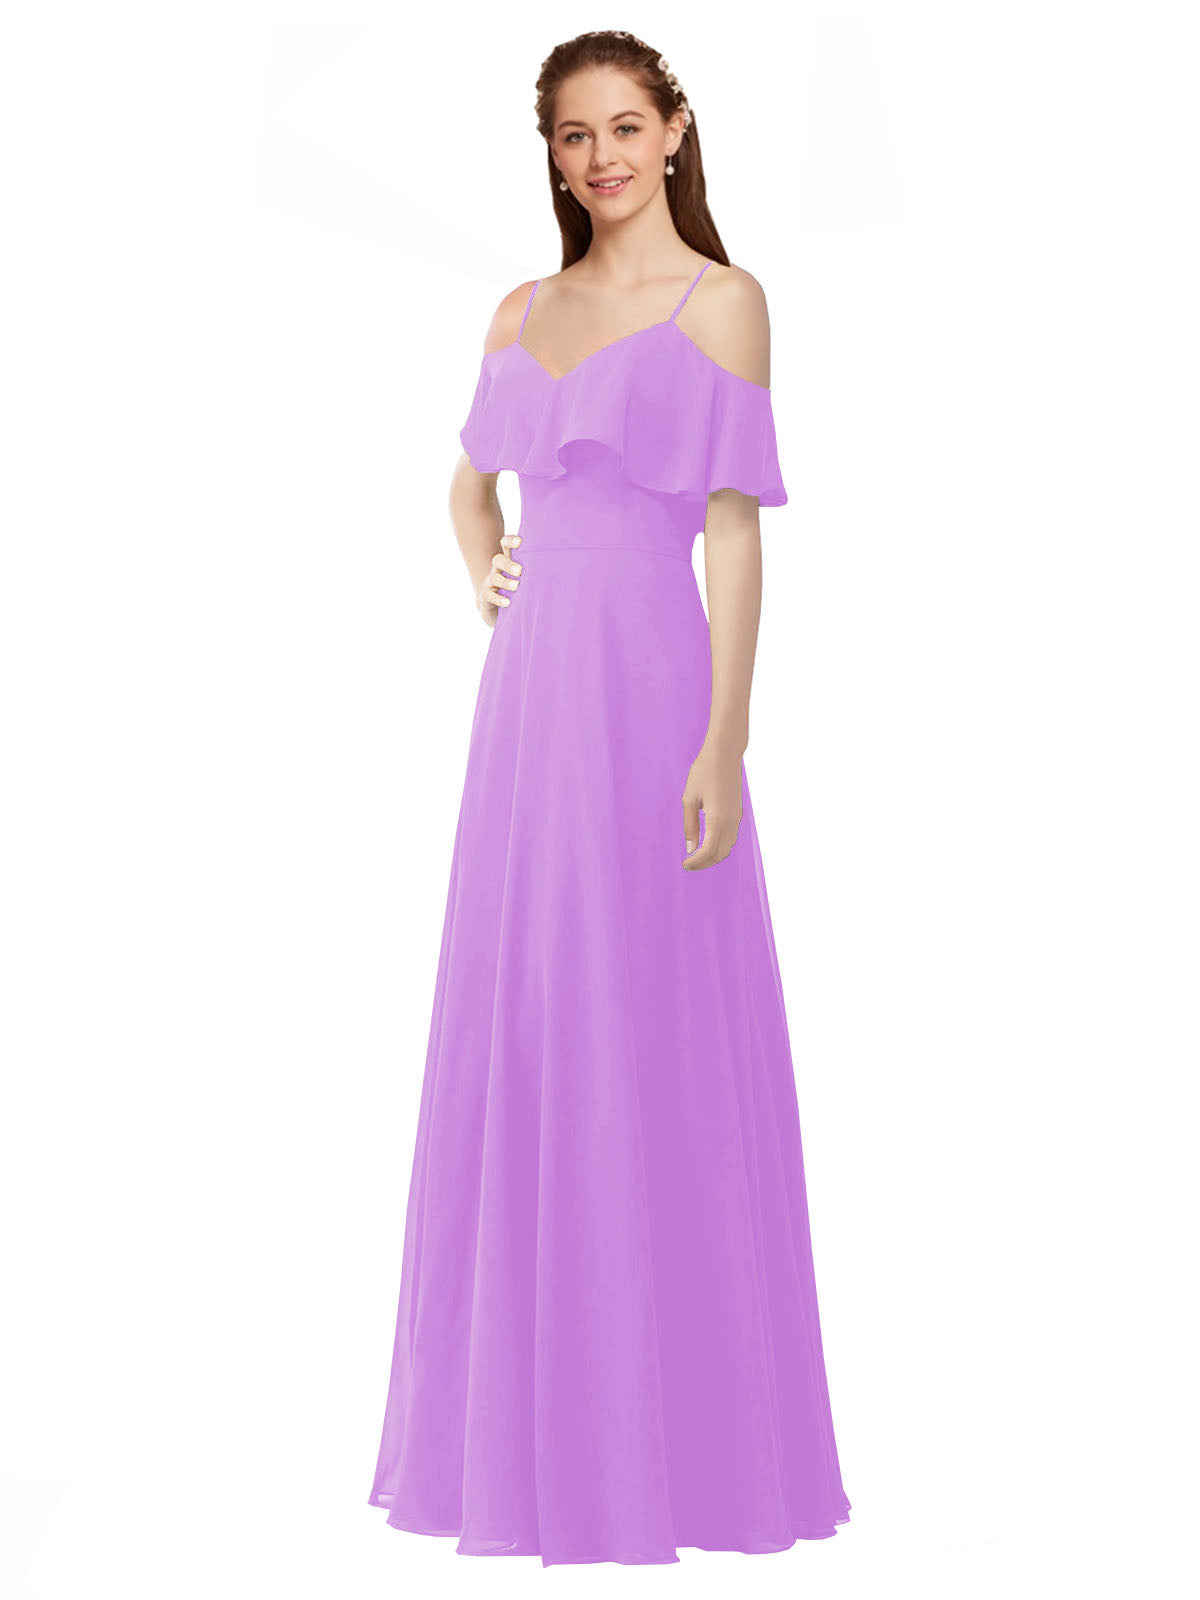 Violet A-Line Off the Shoulder V-Neck Sleeveless Long Bridesmaid Dress Marianna